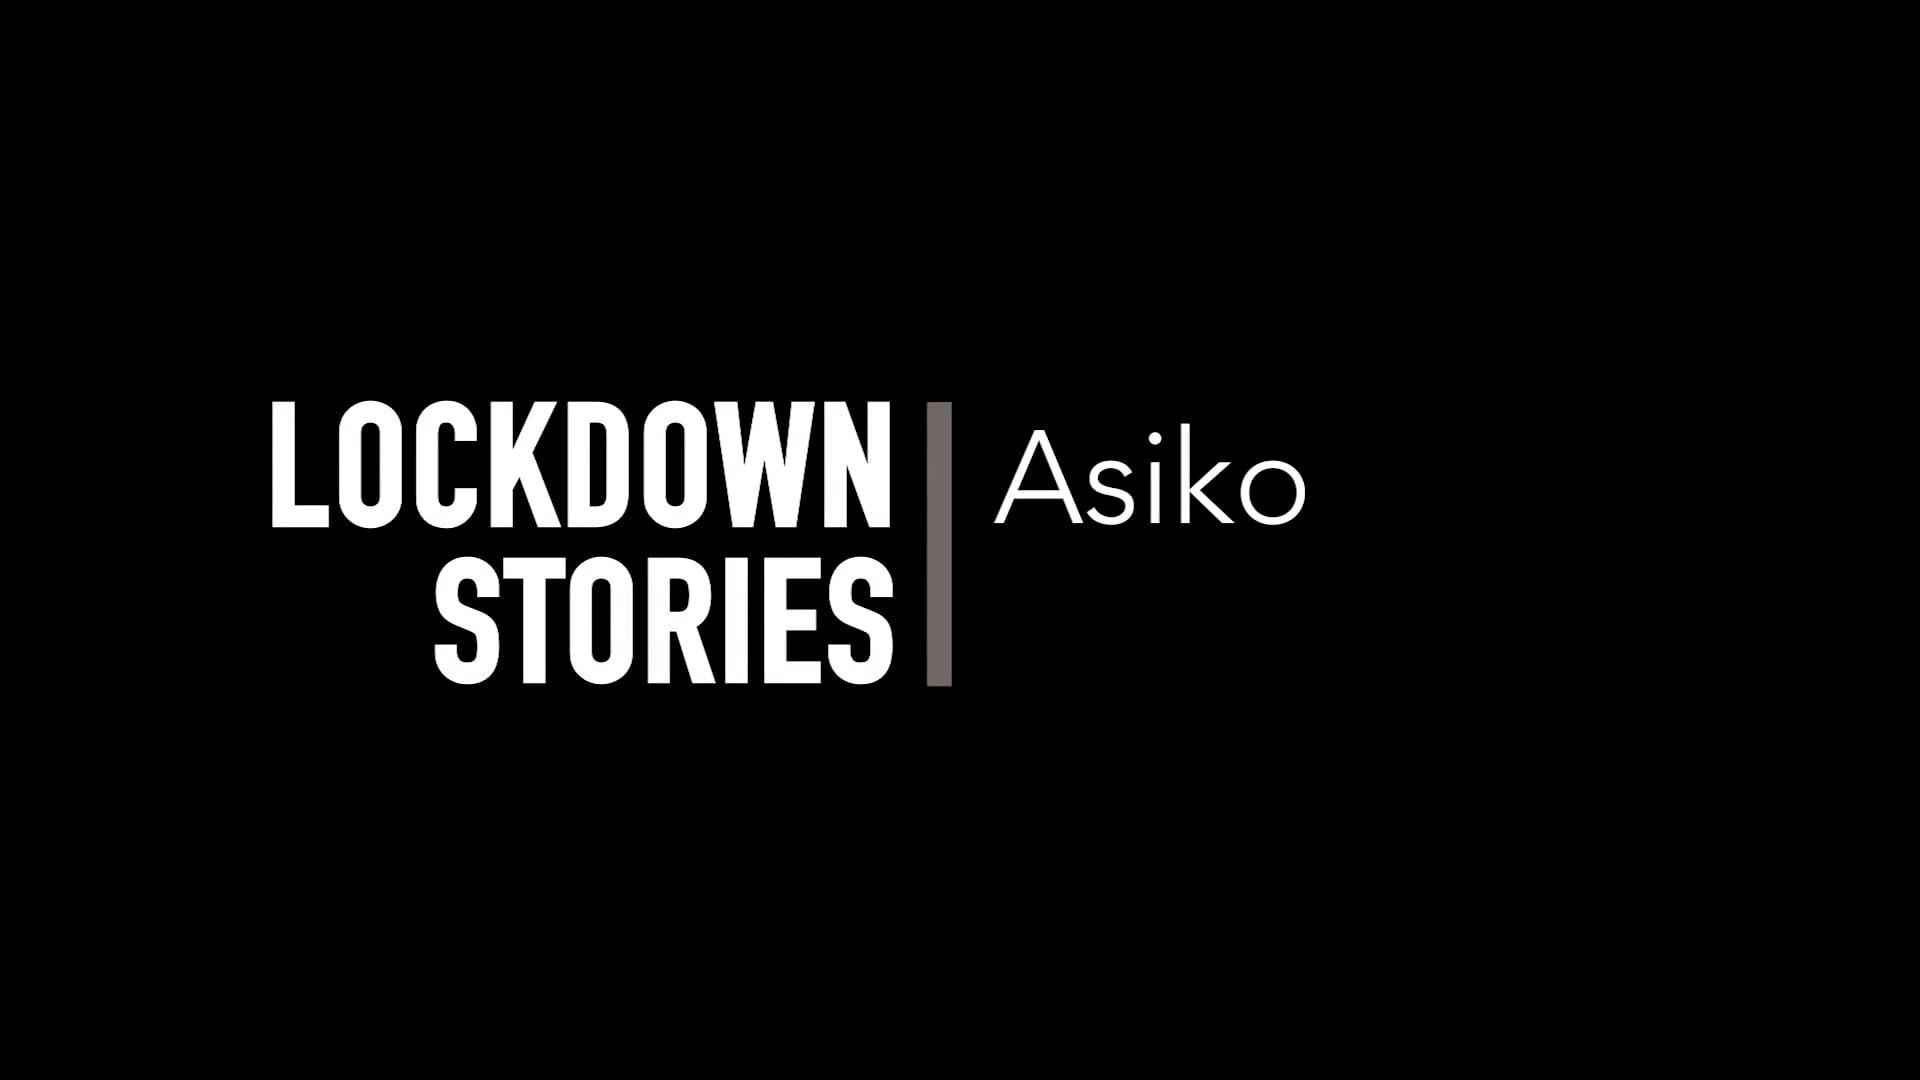 Lockdown Stories. Asiko